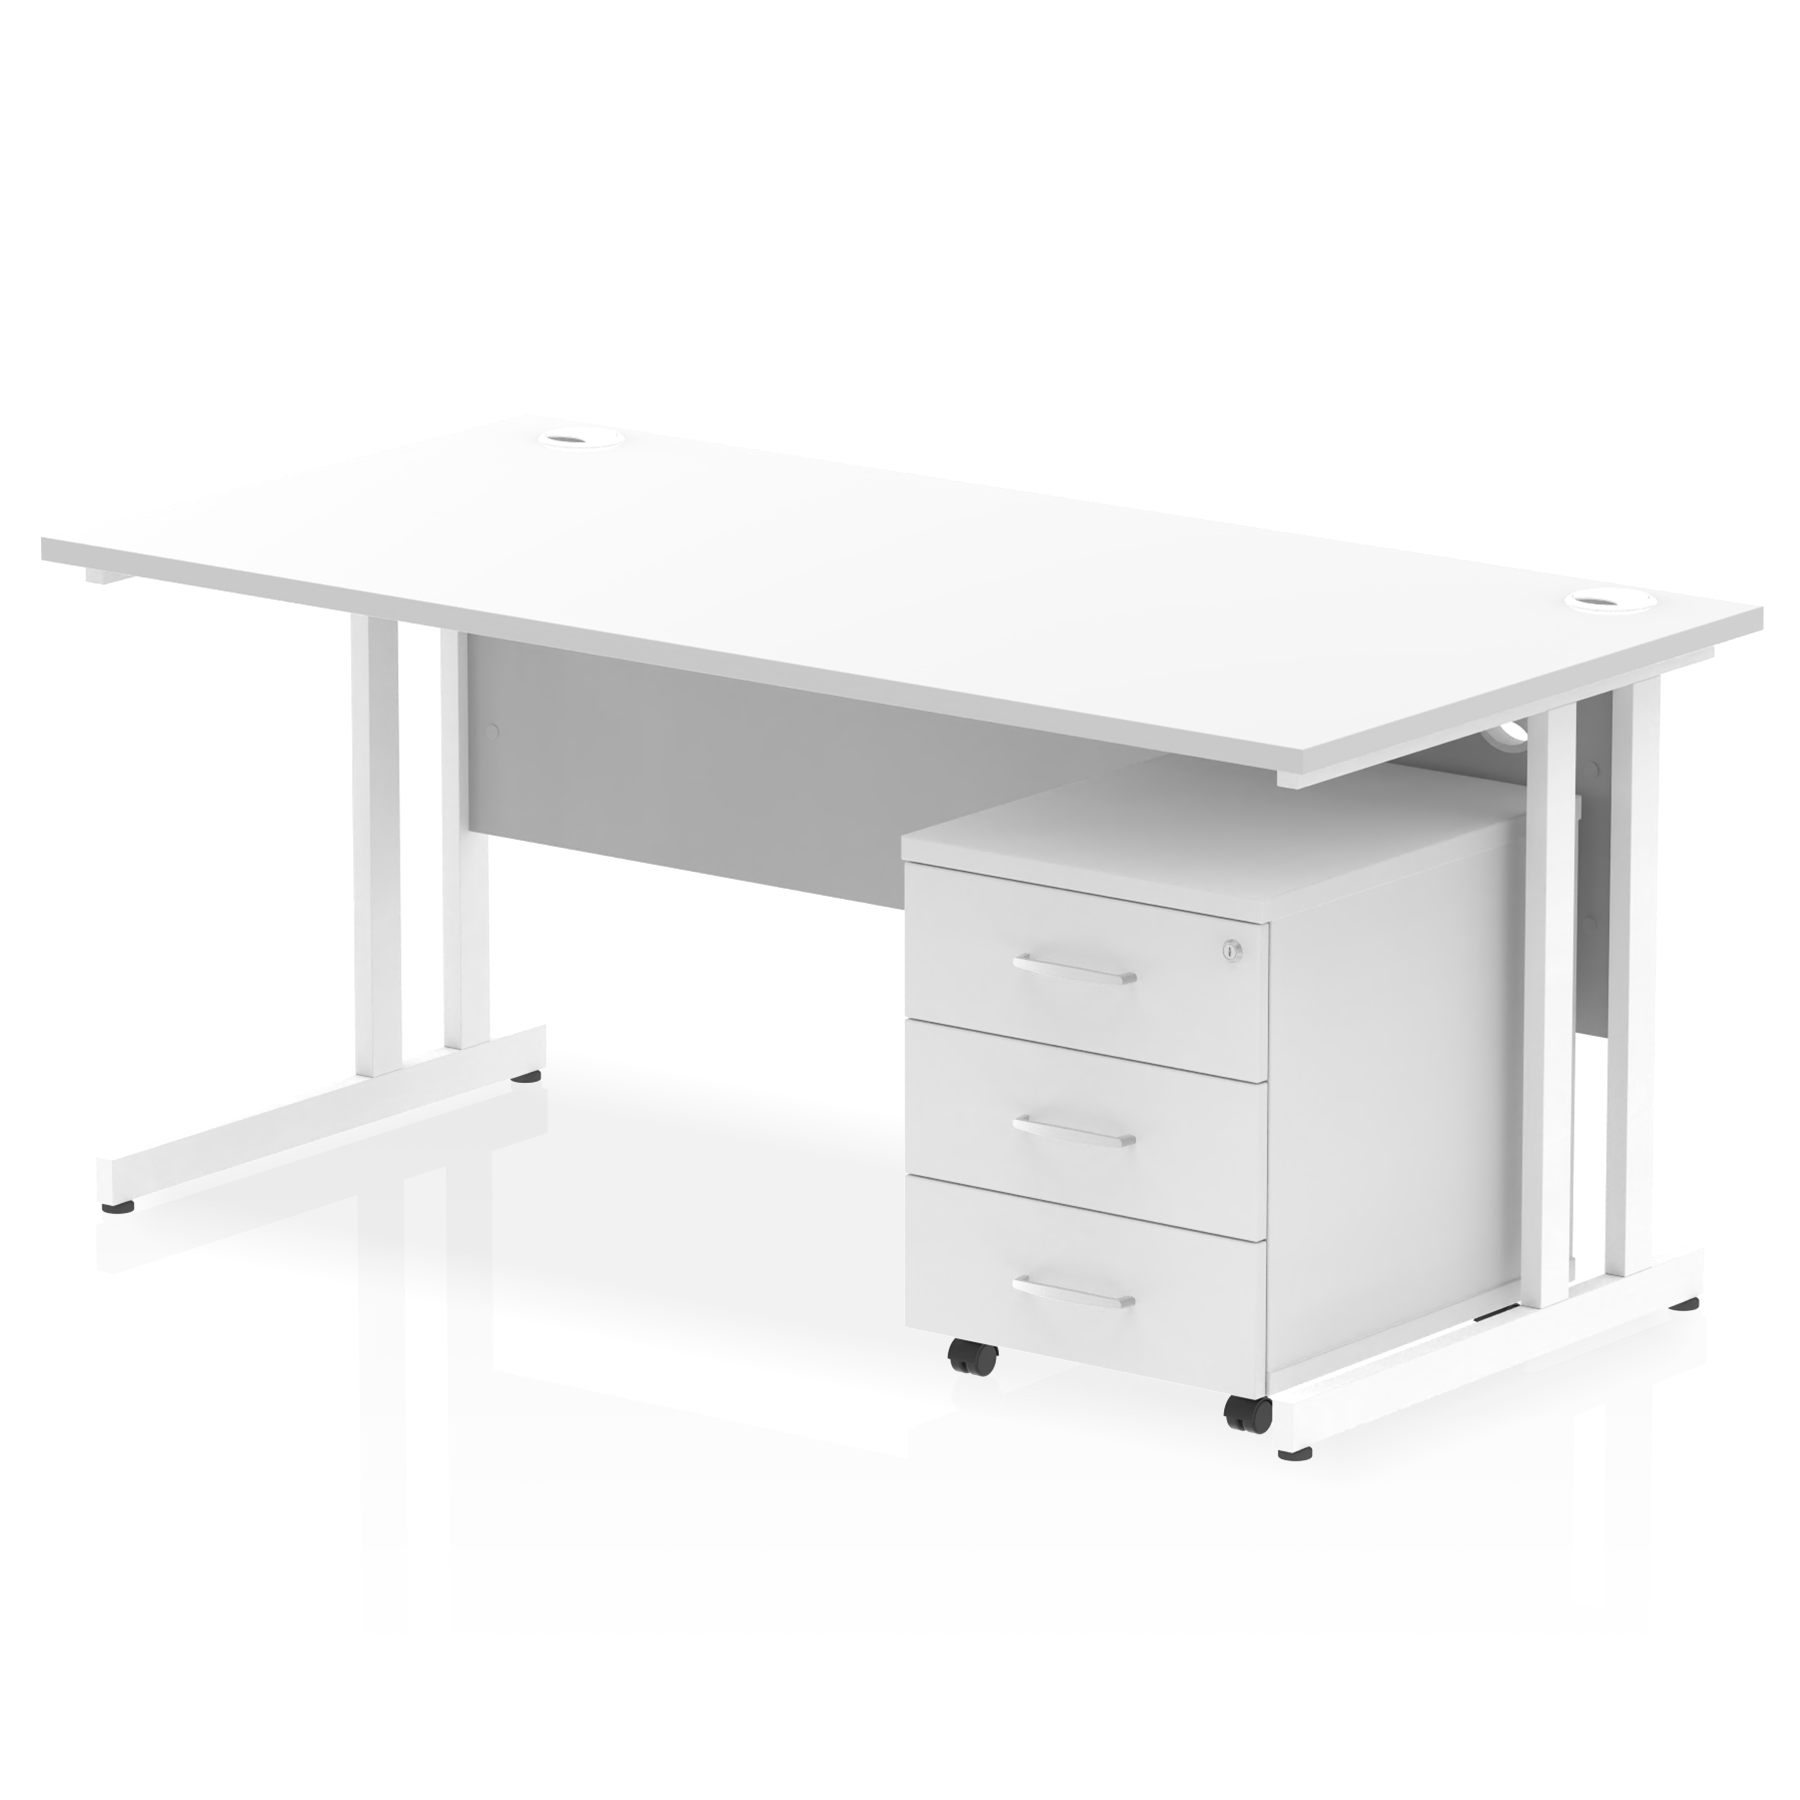 Impulse 1600mm Cantilever Straight Desk With Mobile Pedestal